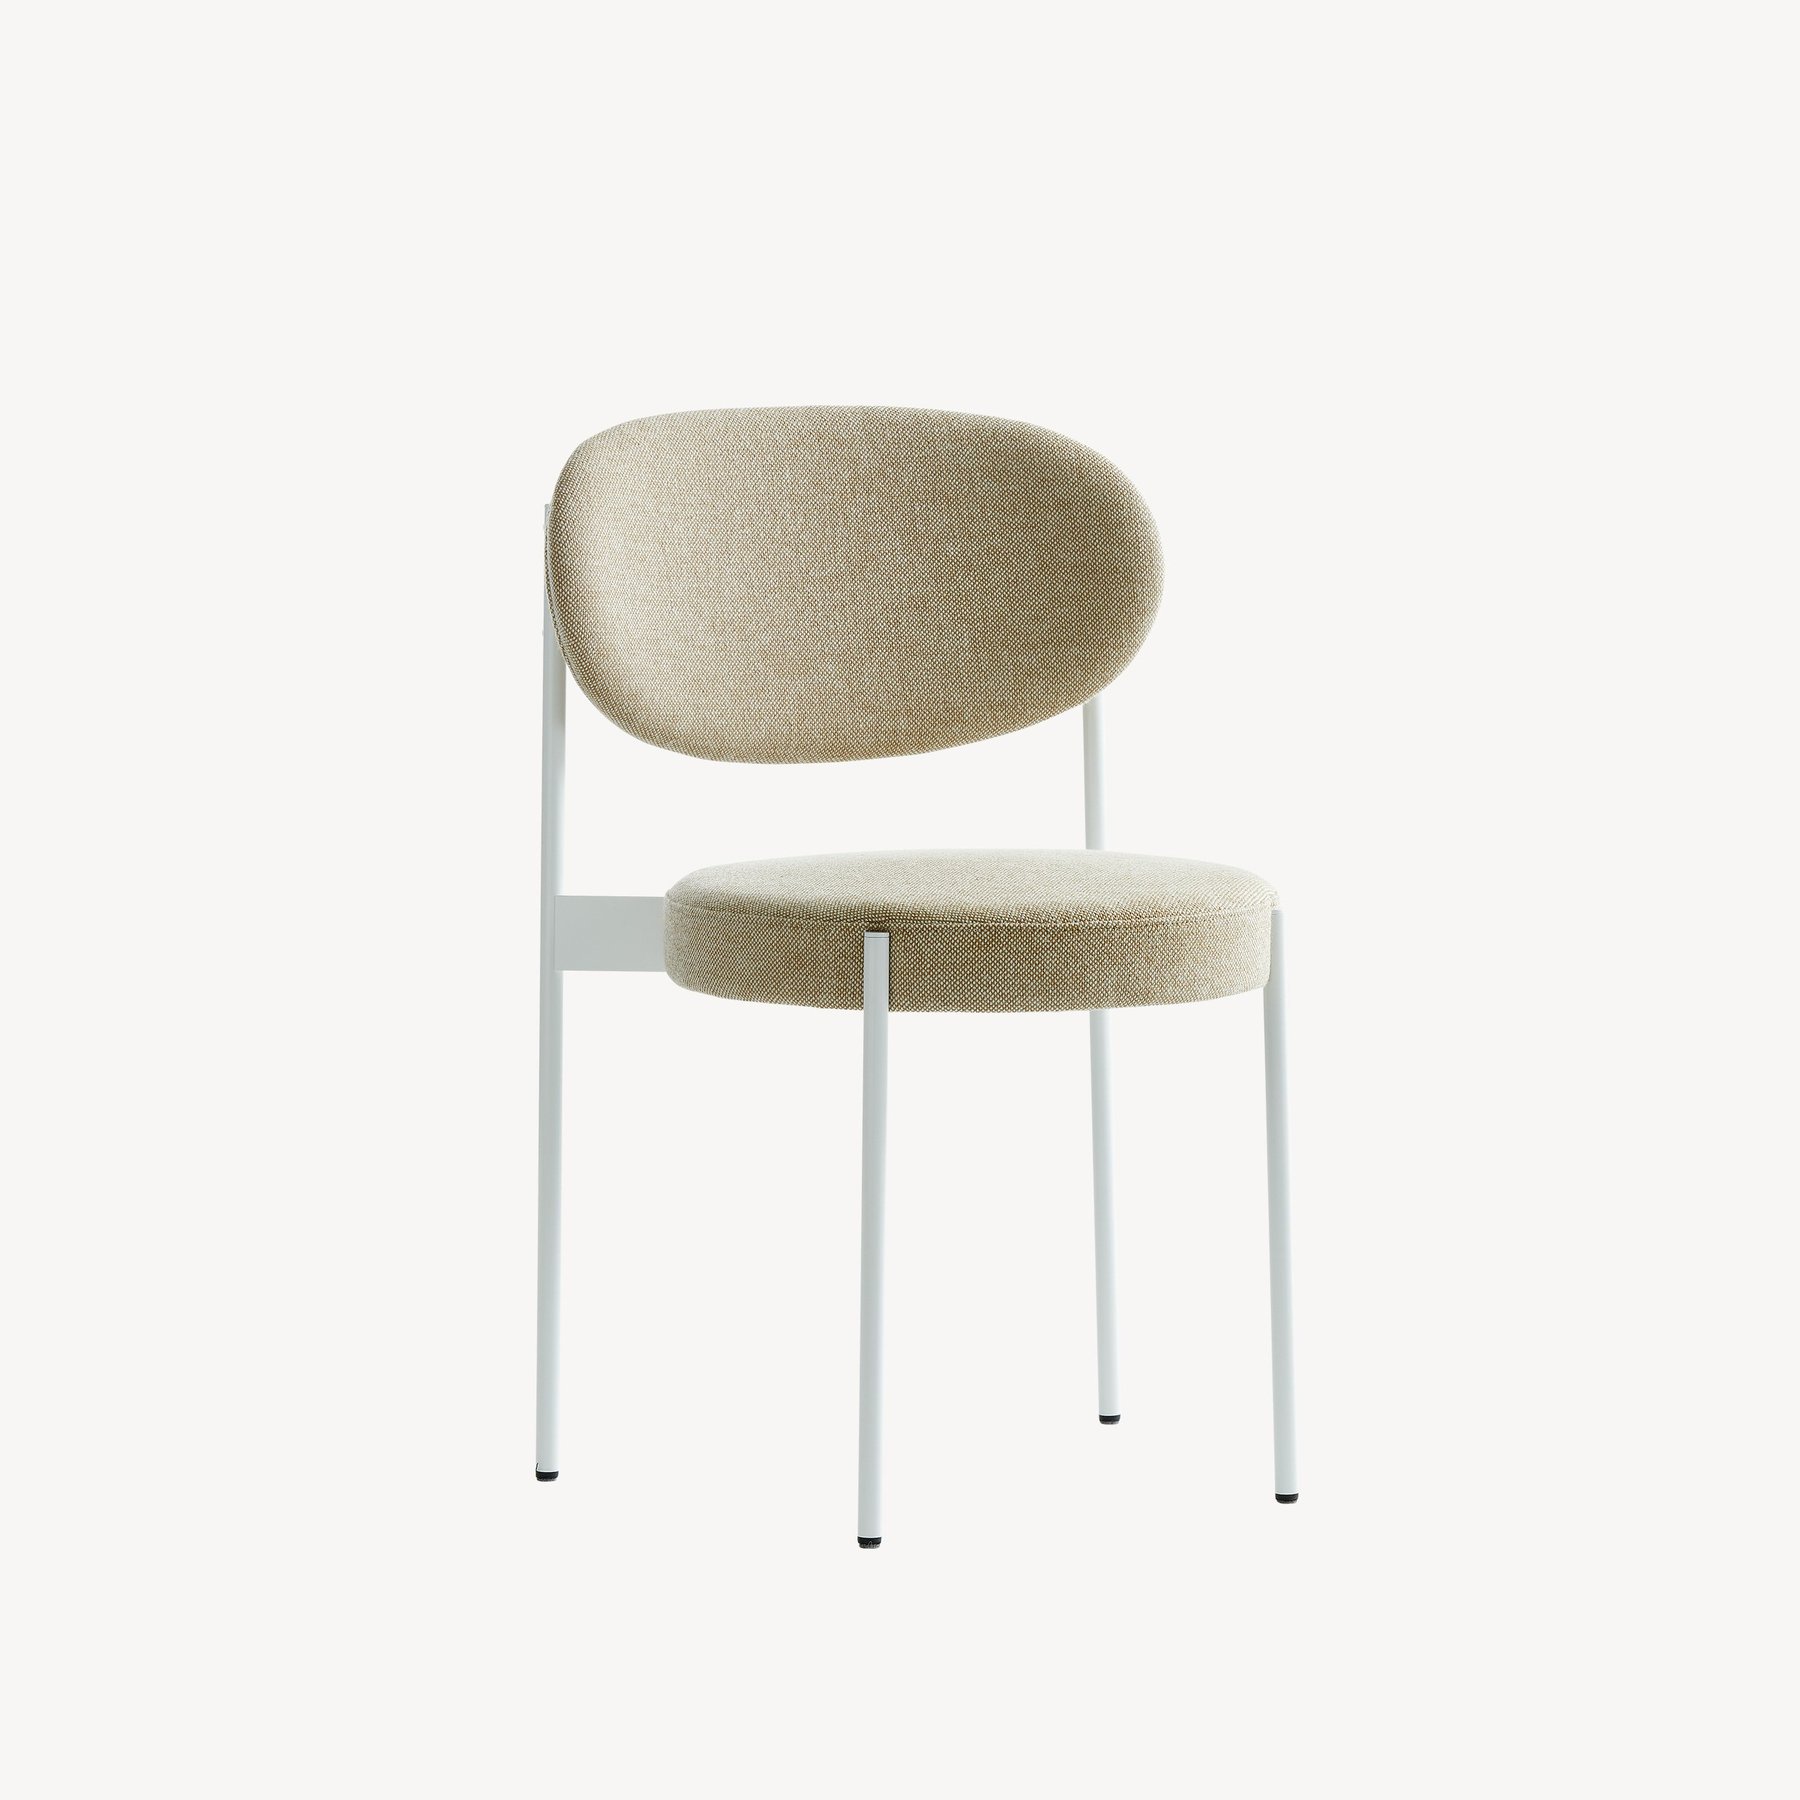 丹麦家具Verpan的SERIES 430 CHAIR WHITE FRAME 餐椅  主图